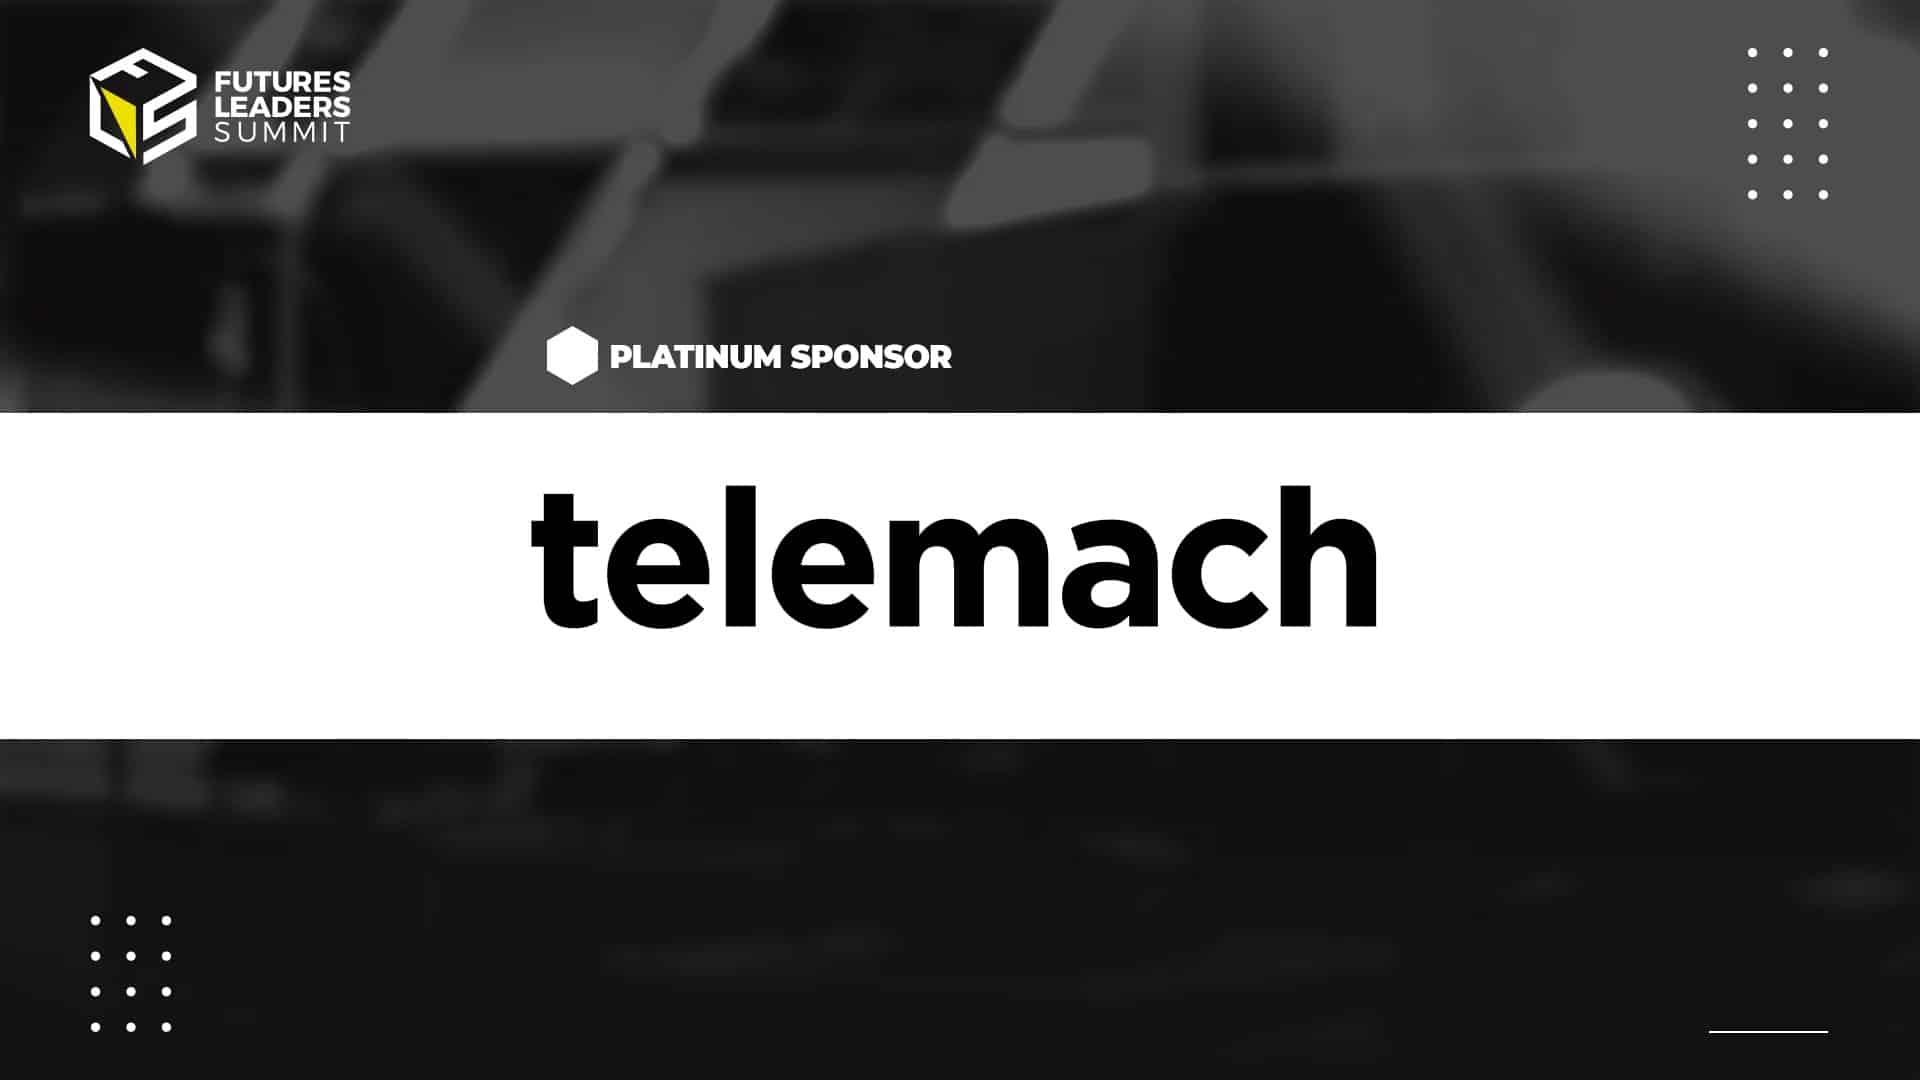 Telemach BH telekomunikacijski partner Futures Leaders Summita